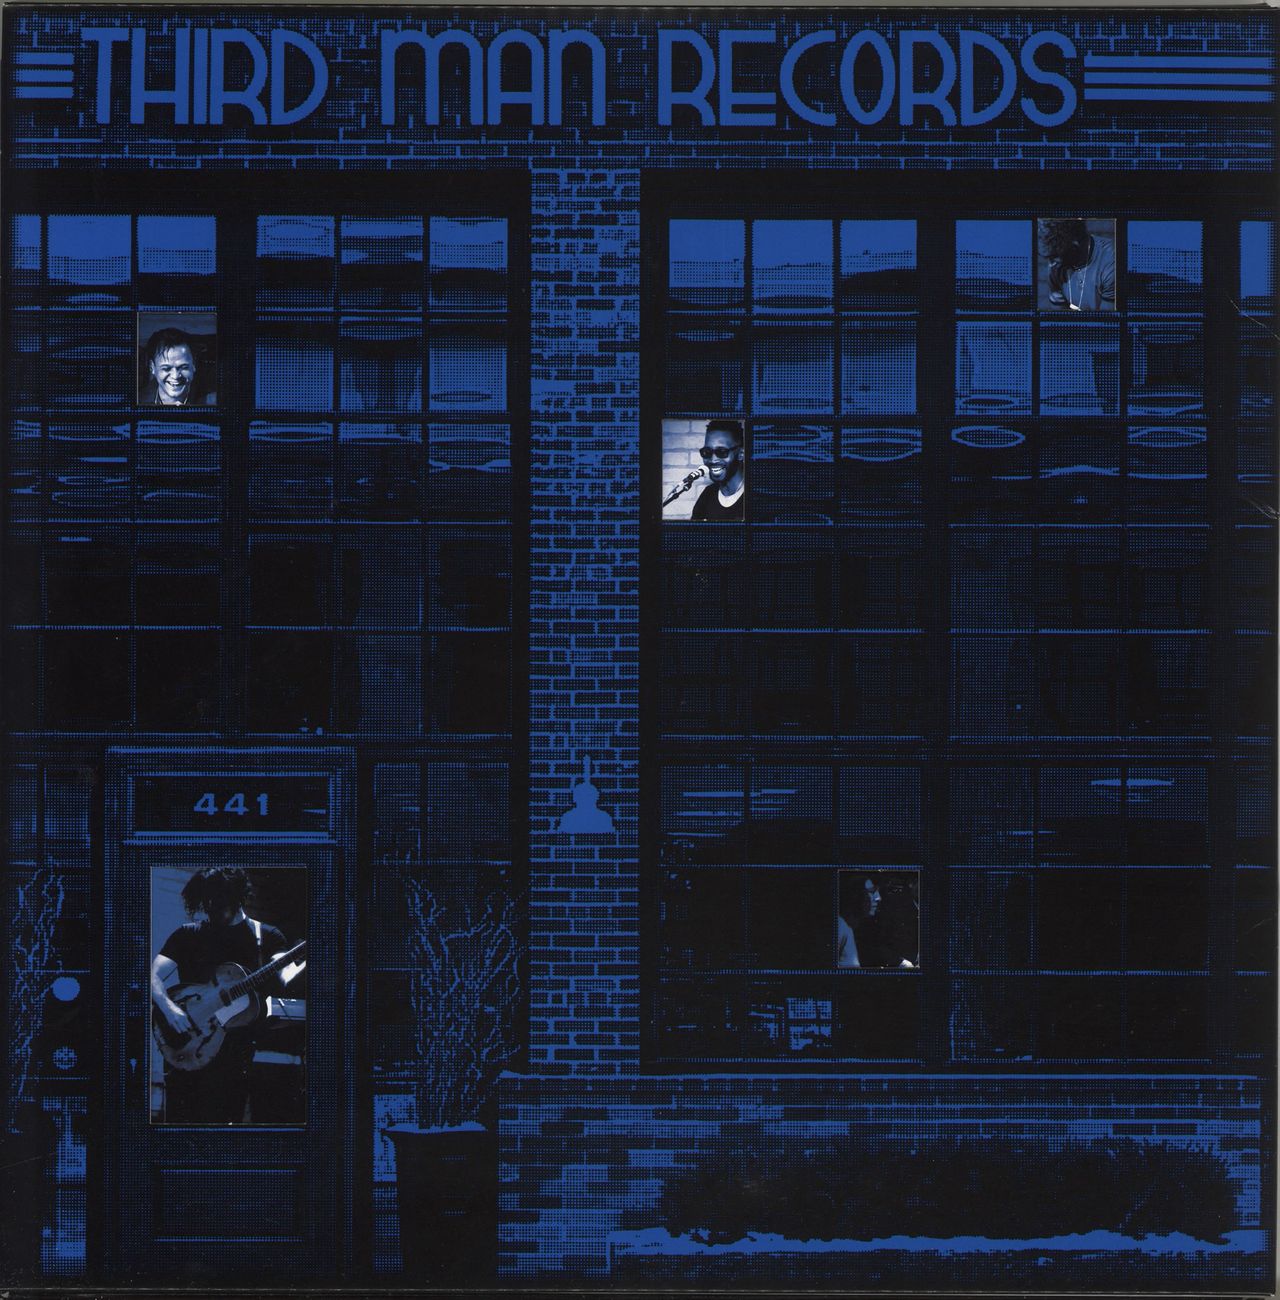 Live at Third Man Records Vinyl LP, Official Store